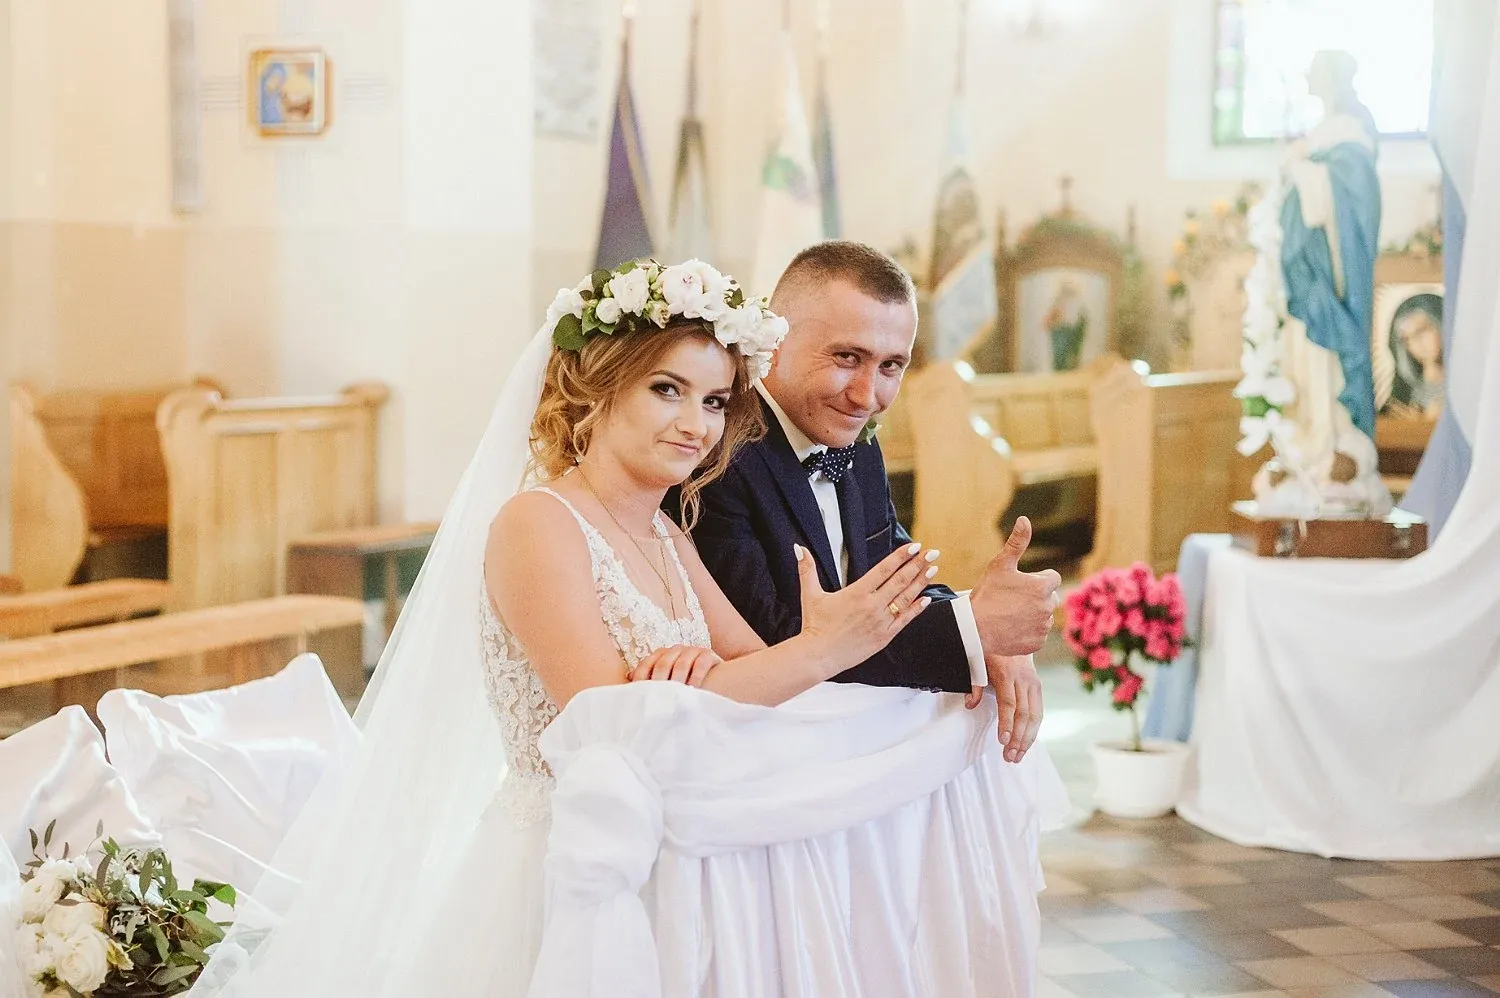 joannamariusz_wedding_16.webp - Joanna & Mariusz- Monika Chmielewska - wedding, portaits, family photography - Munich